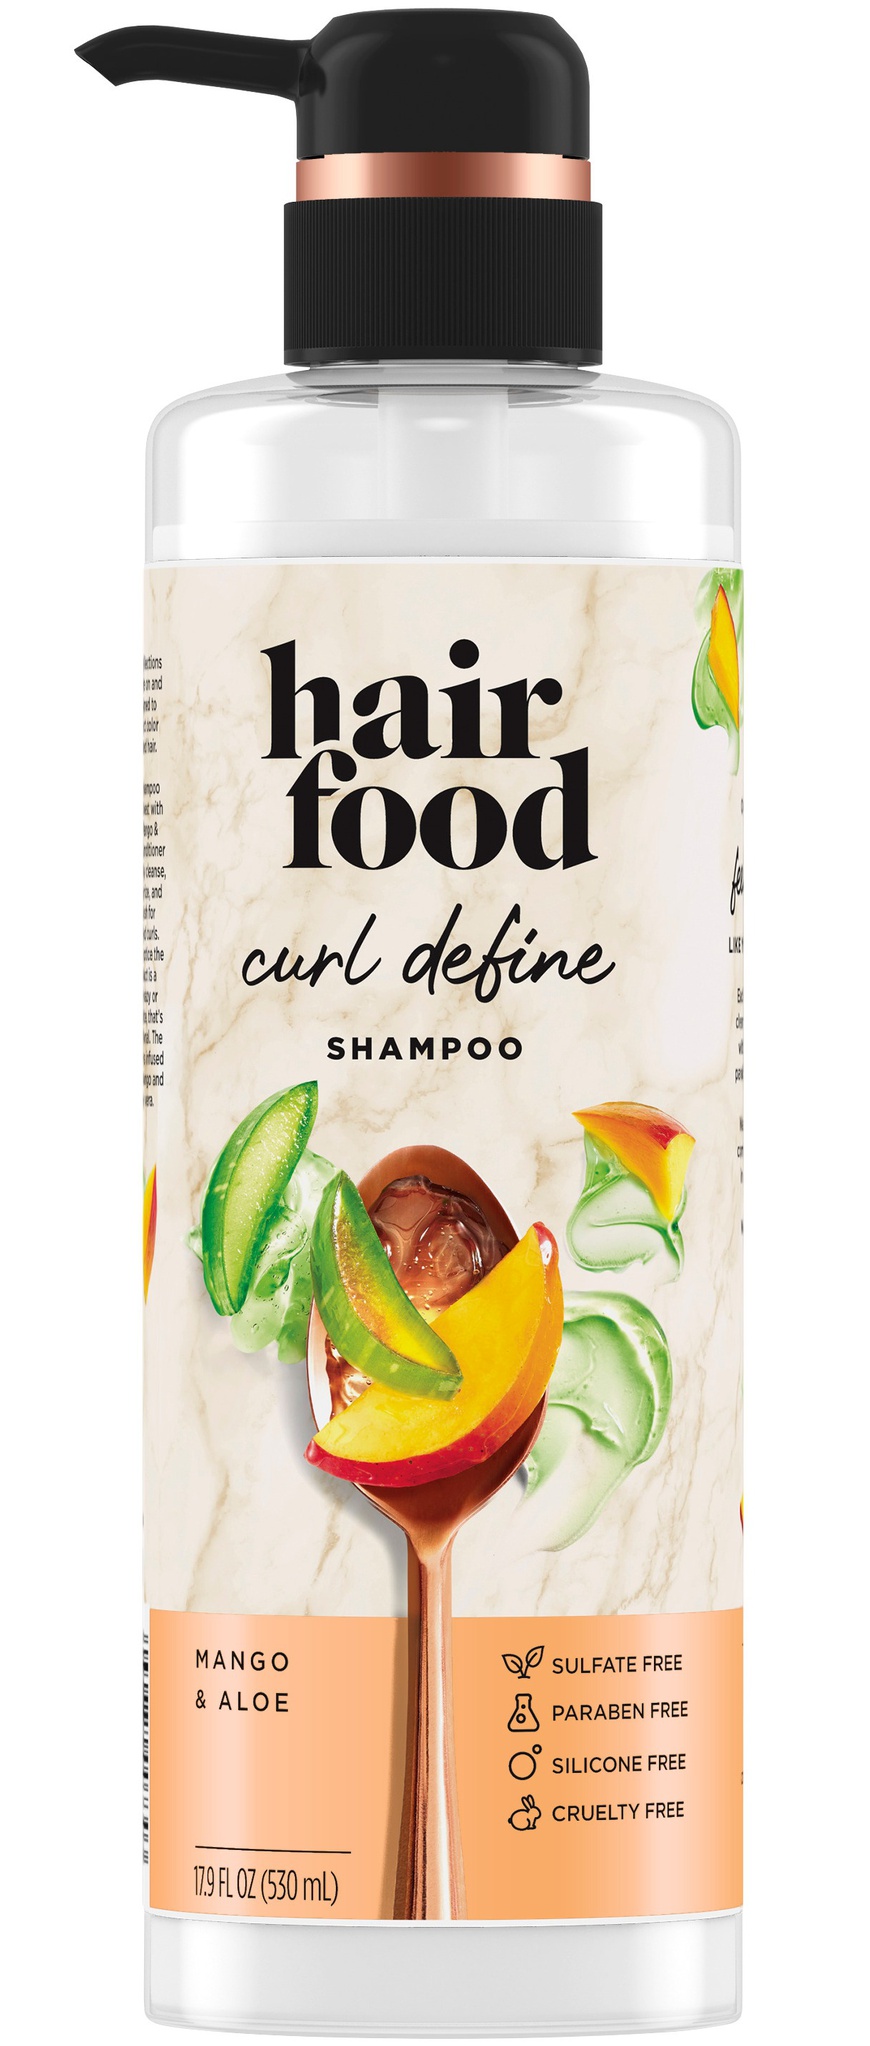 Hair Food Mango & Aloe Curl Definition Shampoo ingredients (Explained)